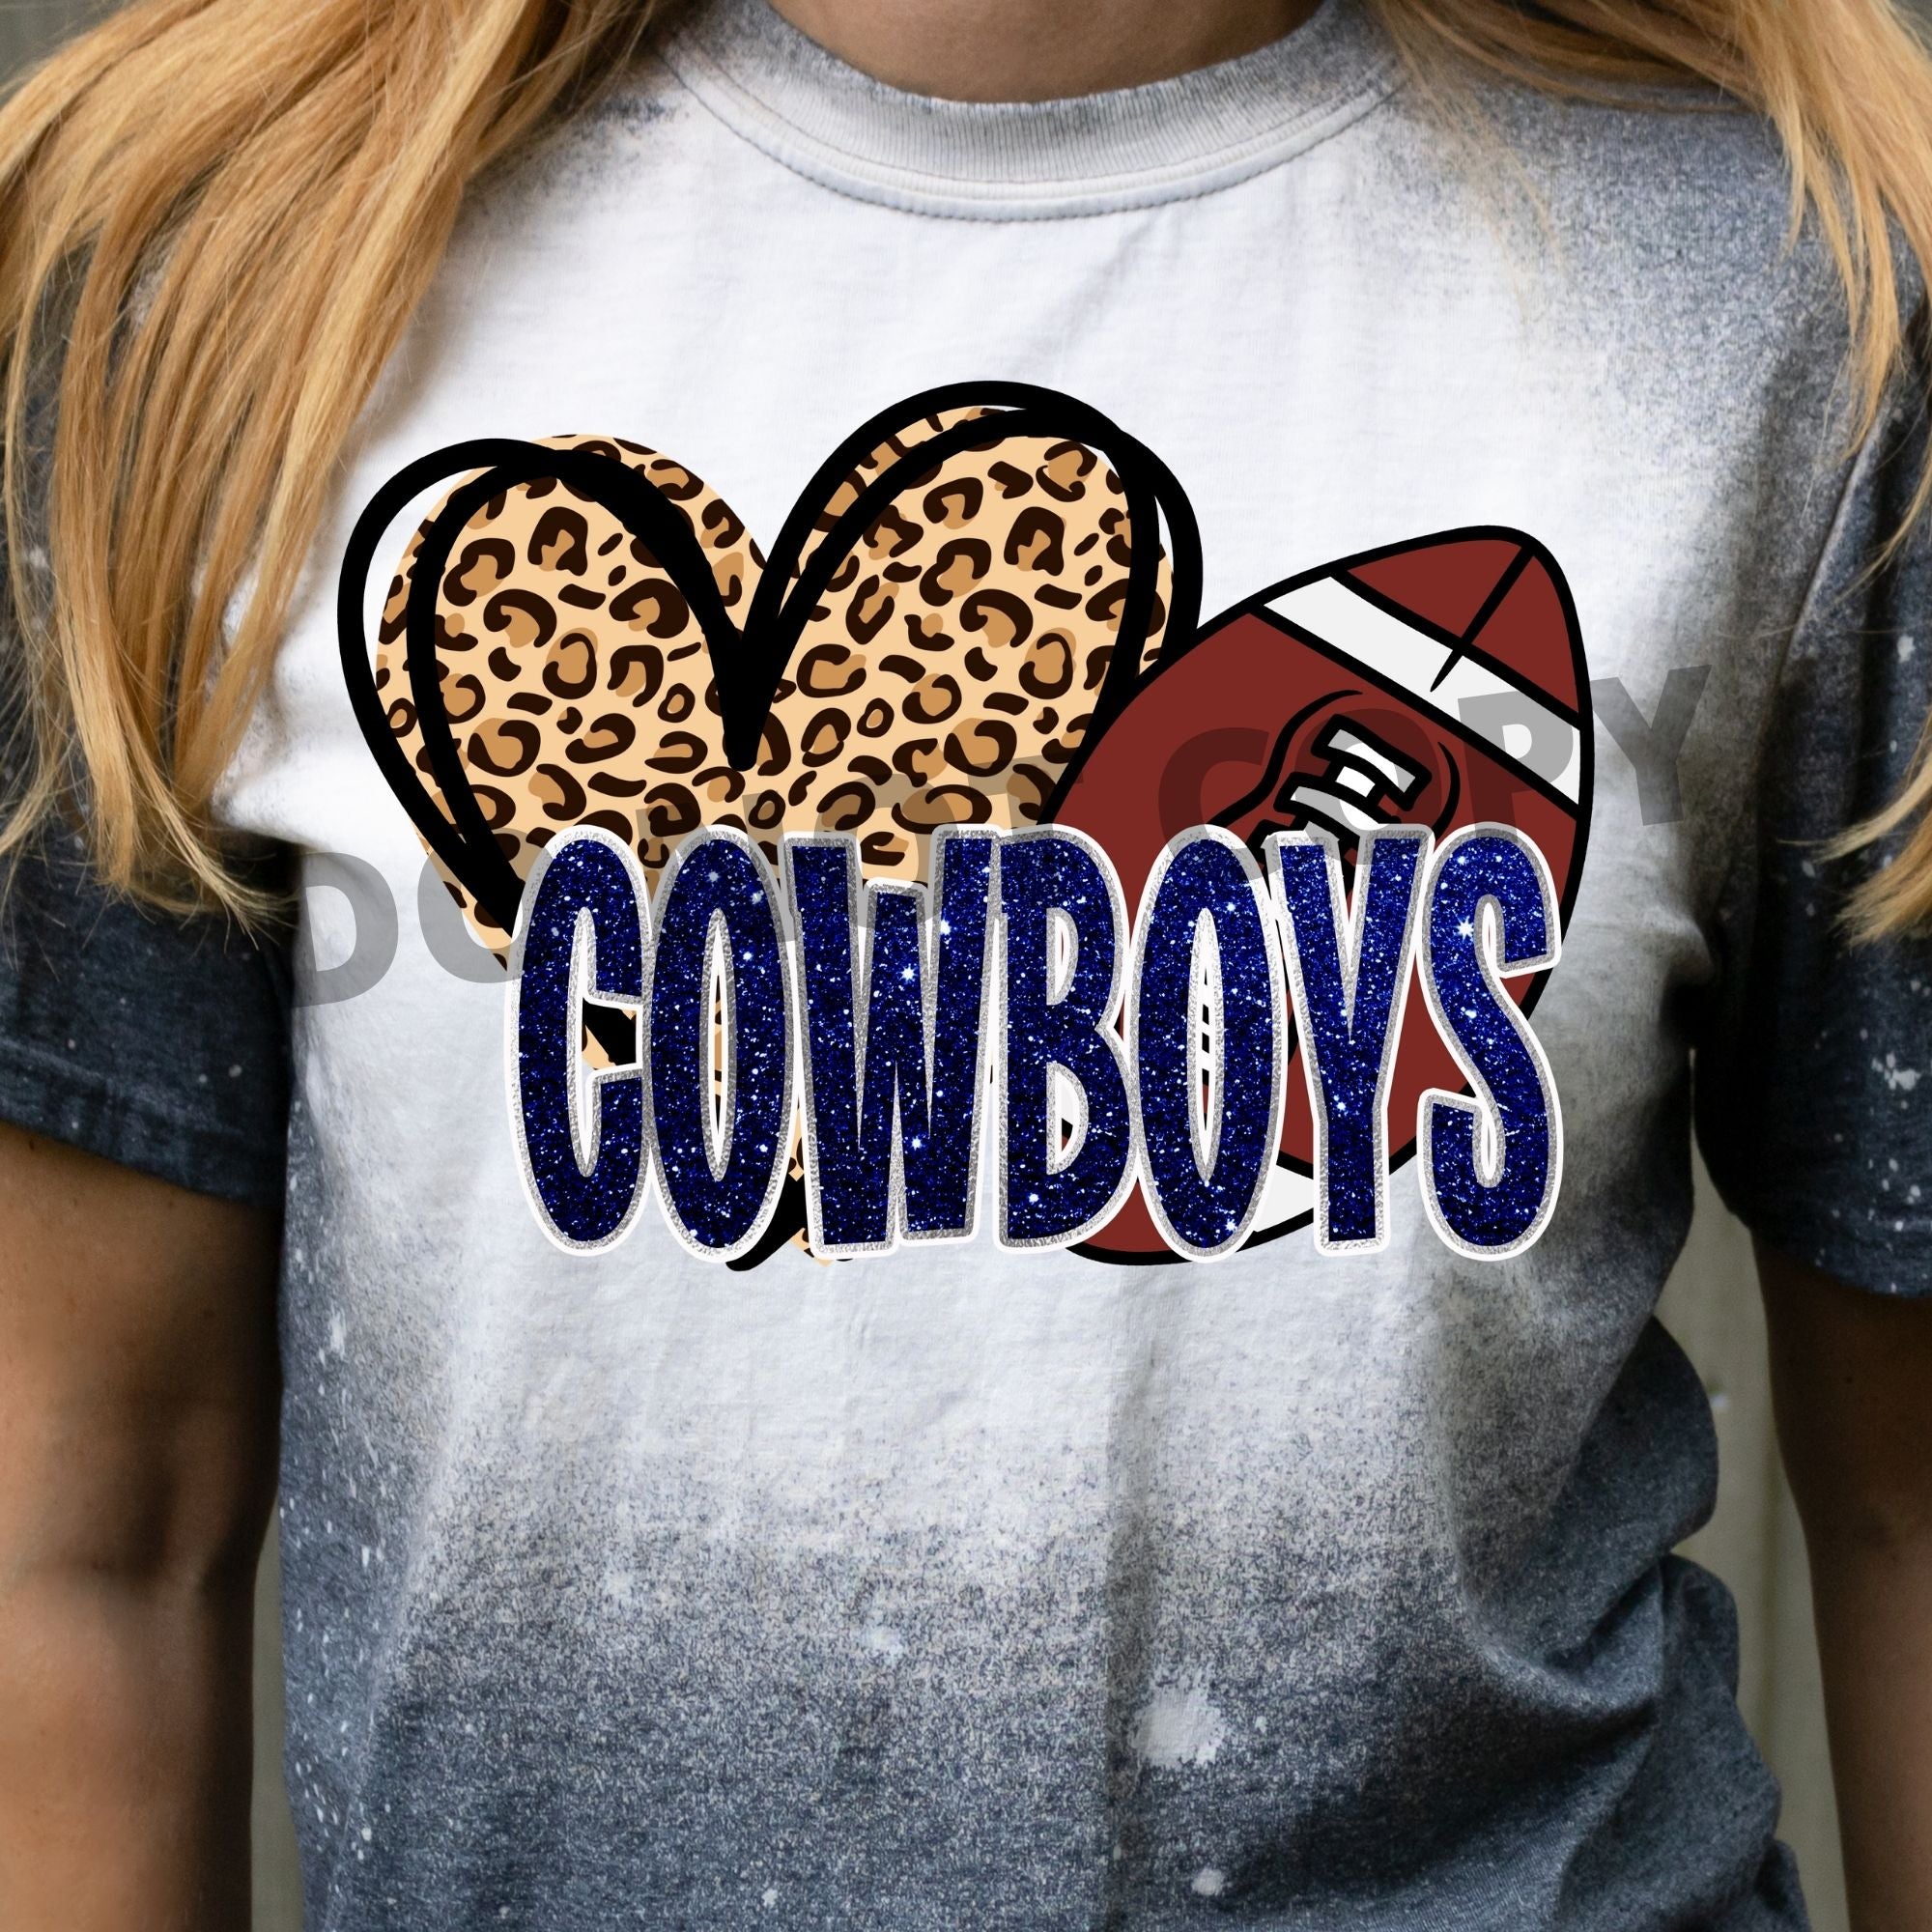 Dallas Cowboys PNG, shirt designs - Inspire Uplift